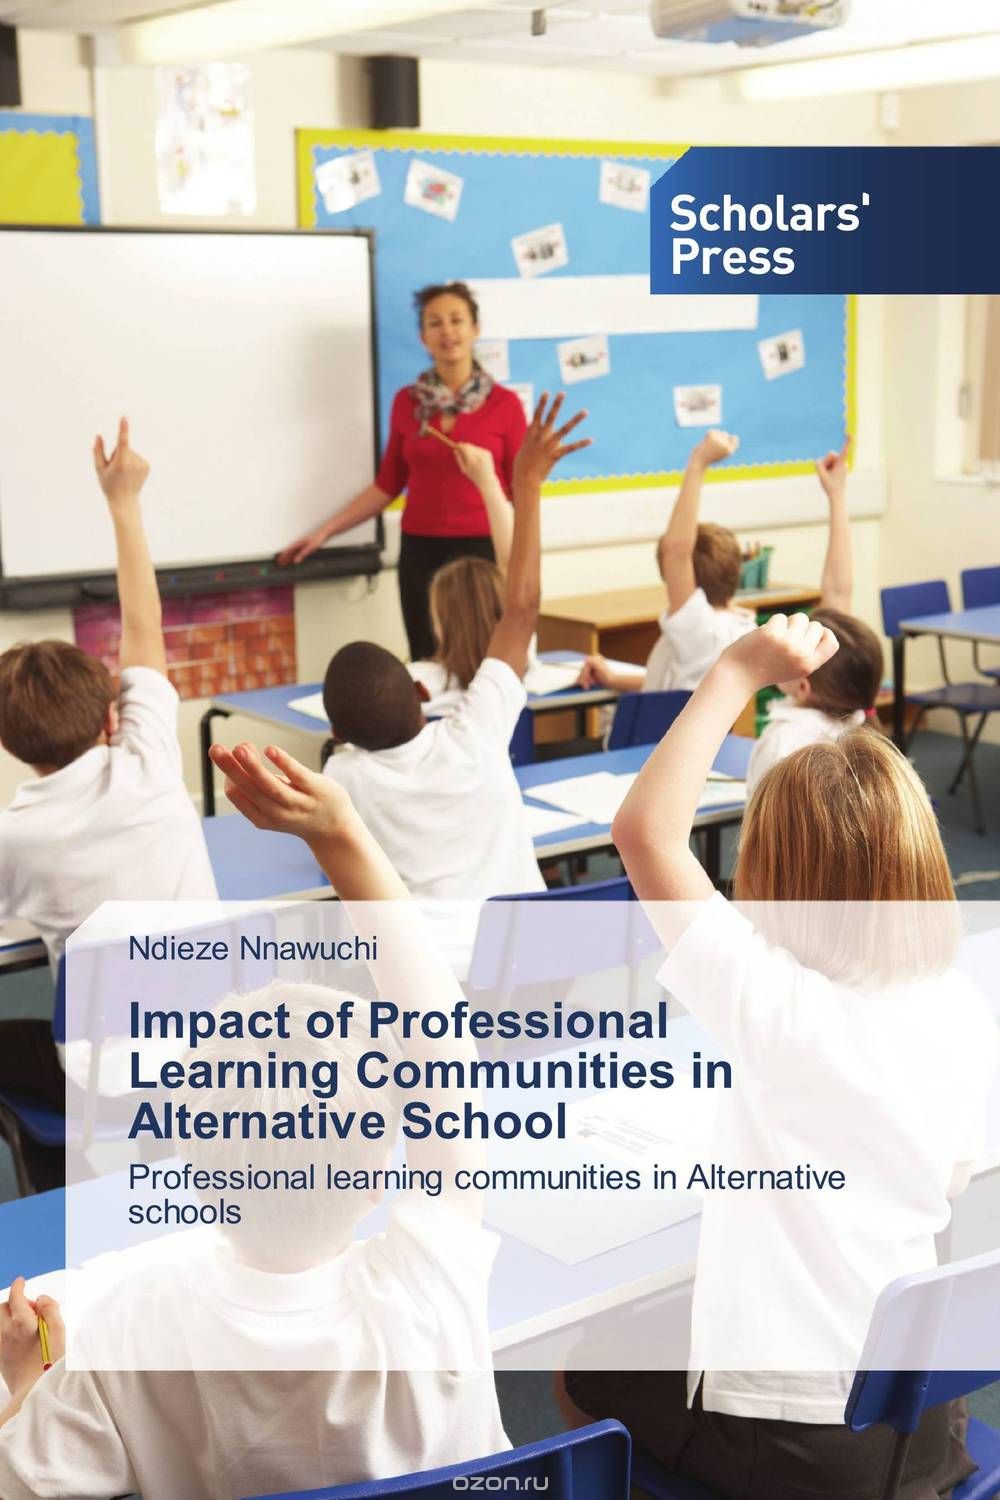 Скачать книгу "Impact of Professional Learning Communities in Alternative School"